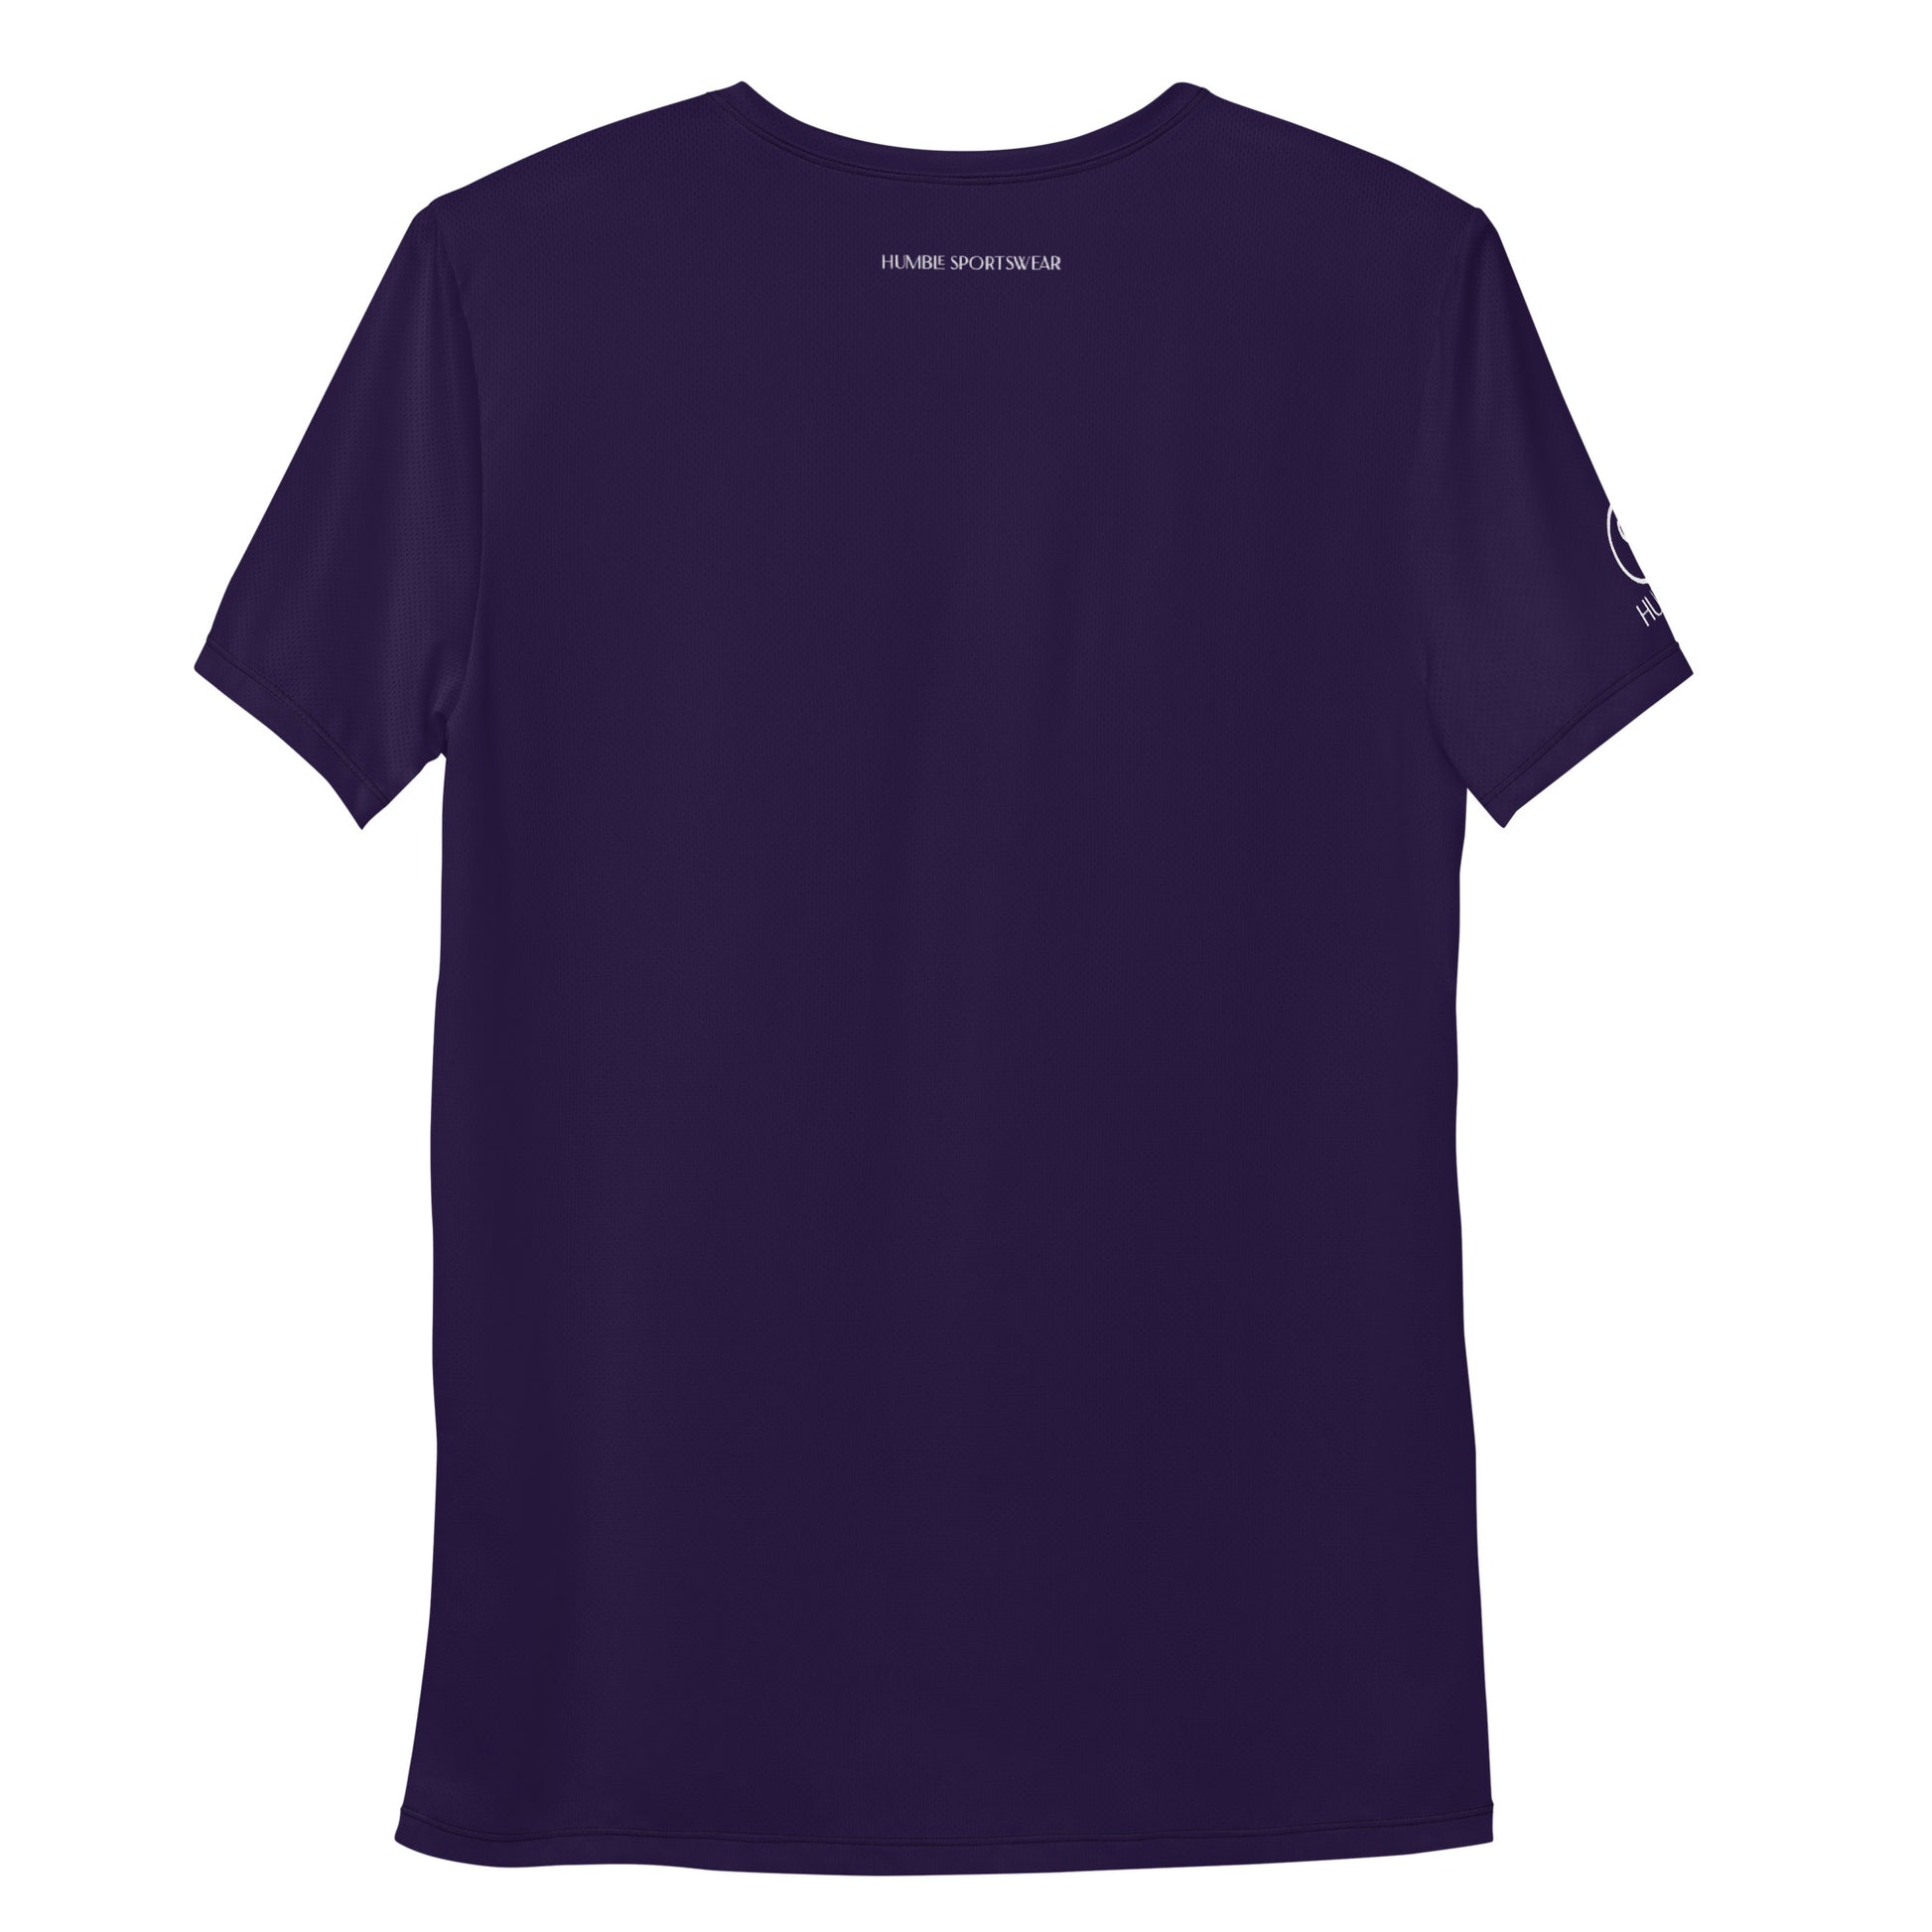 Humble Sportswear, Men's active mesh gym t-shirt, purple tops for men